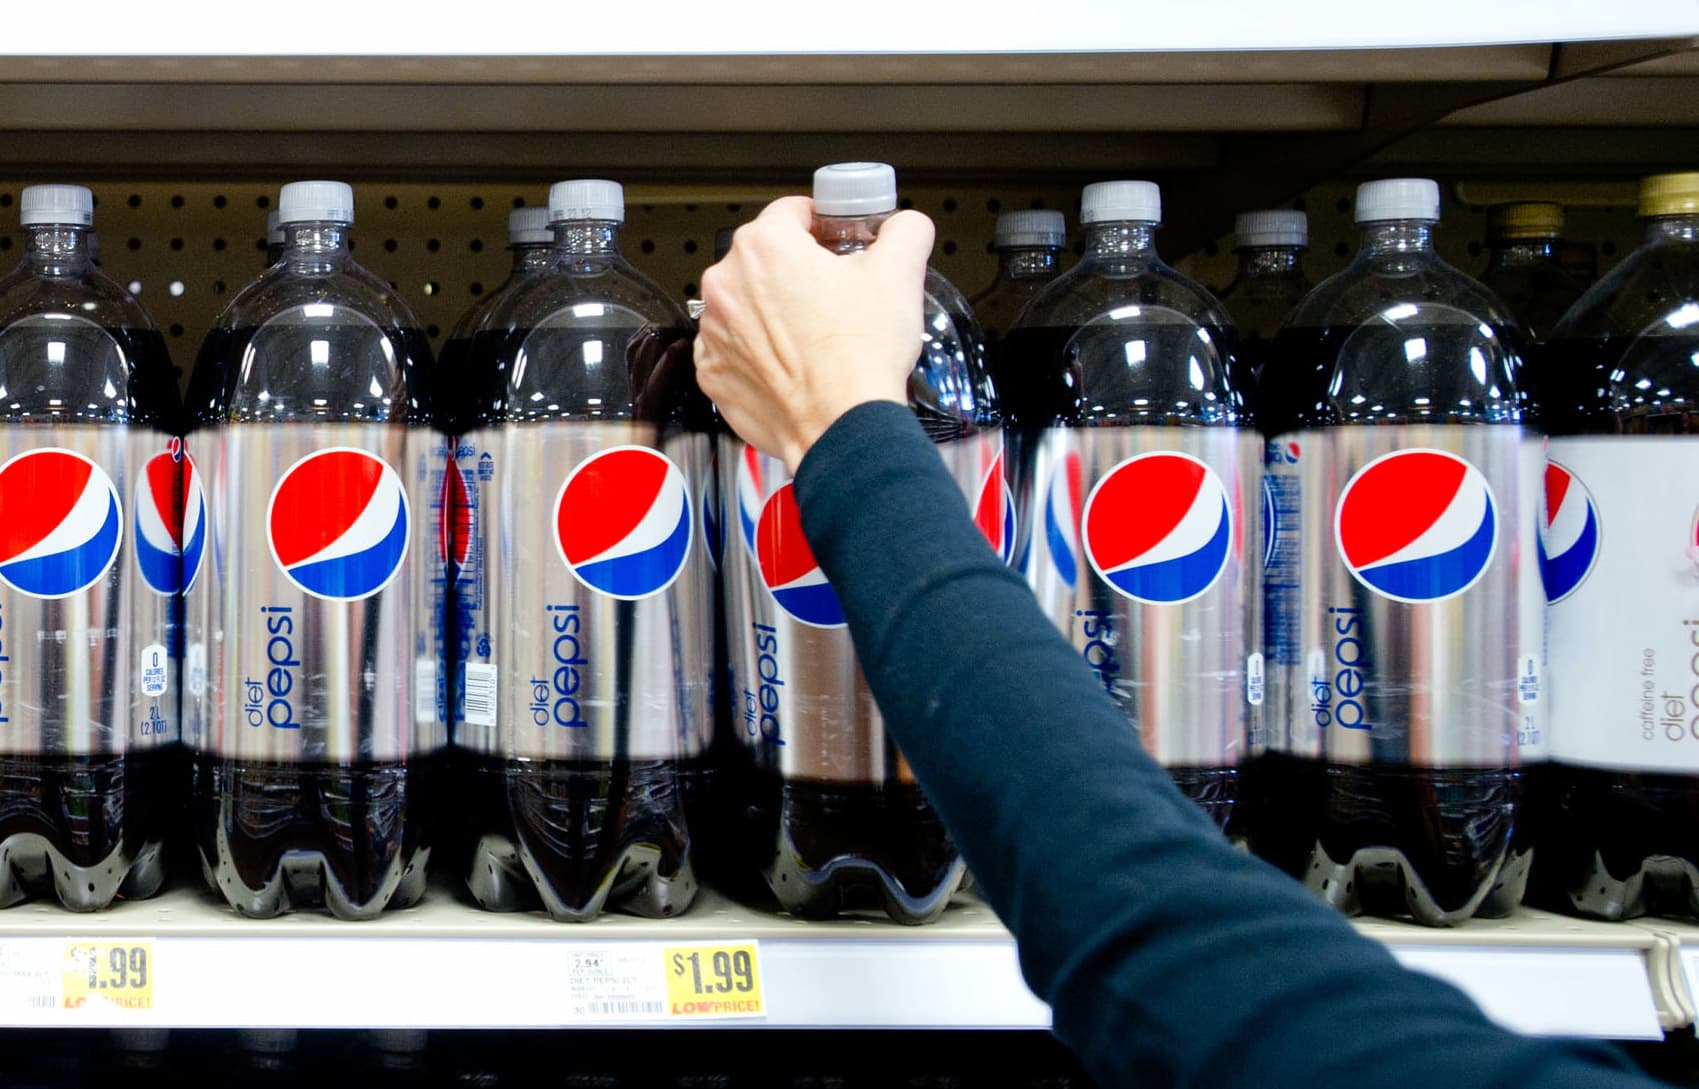 A woman grabs a bottle of Diet Pepsi in Atlanta, Georgia.